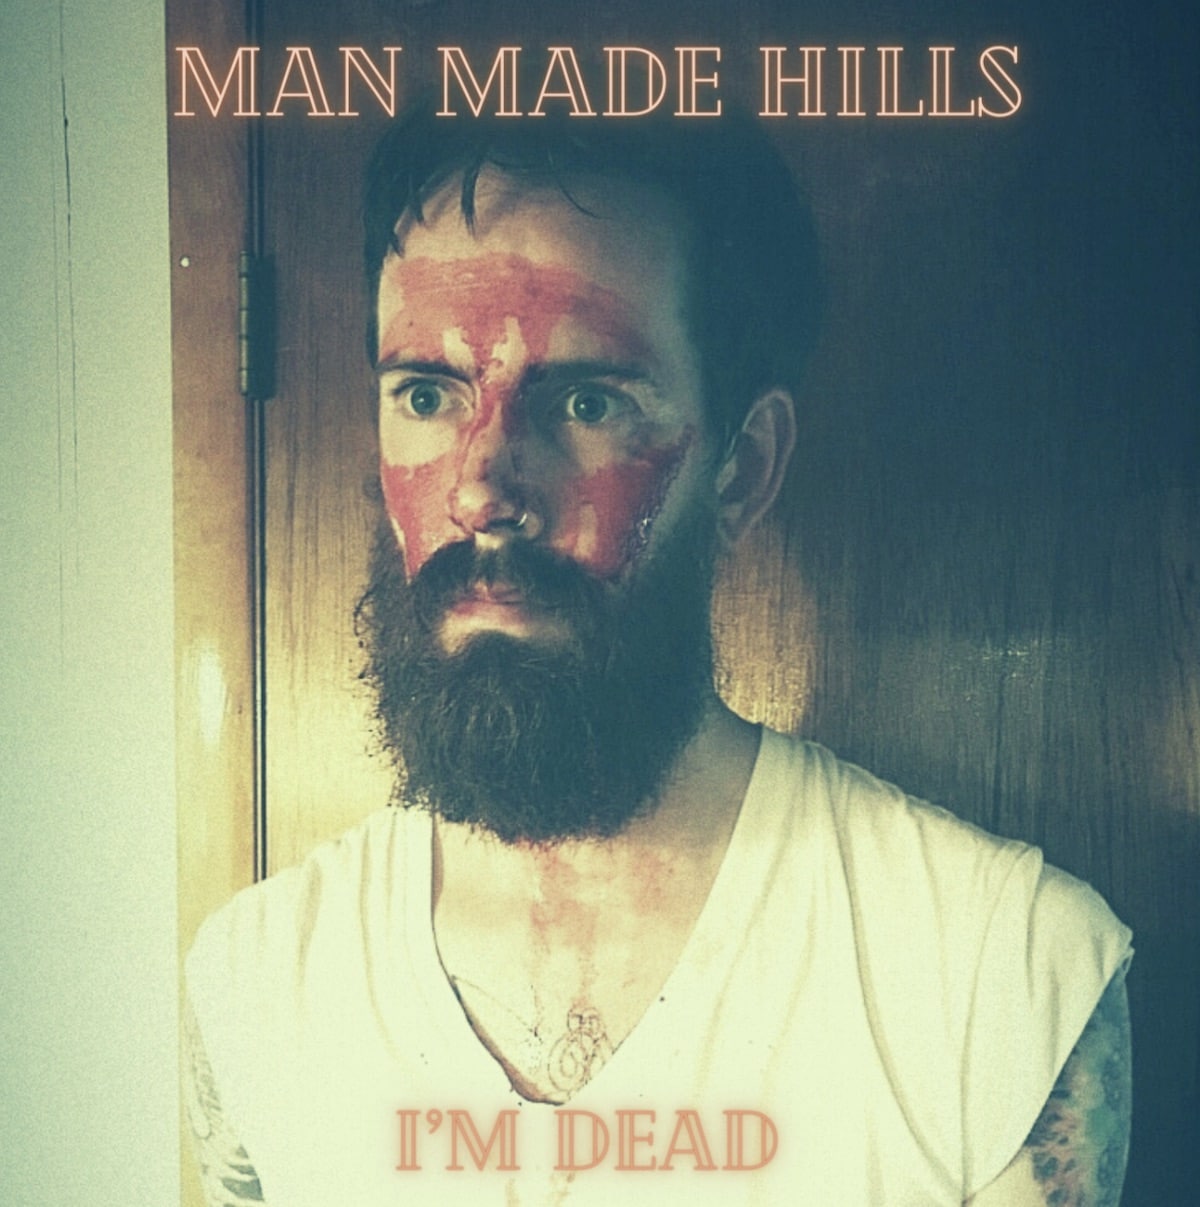 Man Made Hills discuss new single I'm Dead